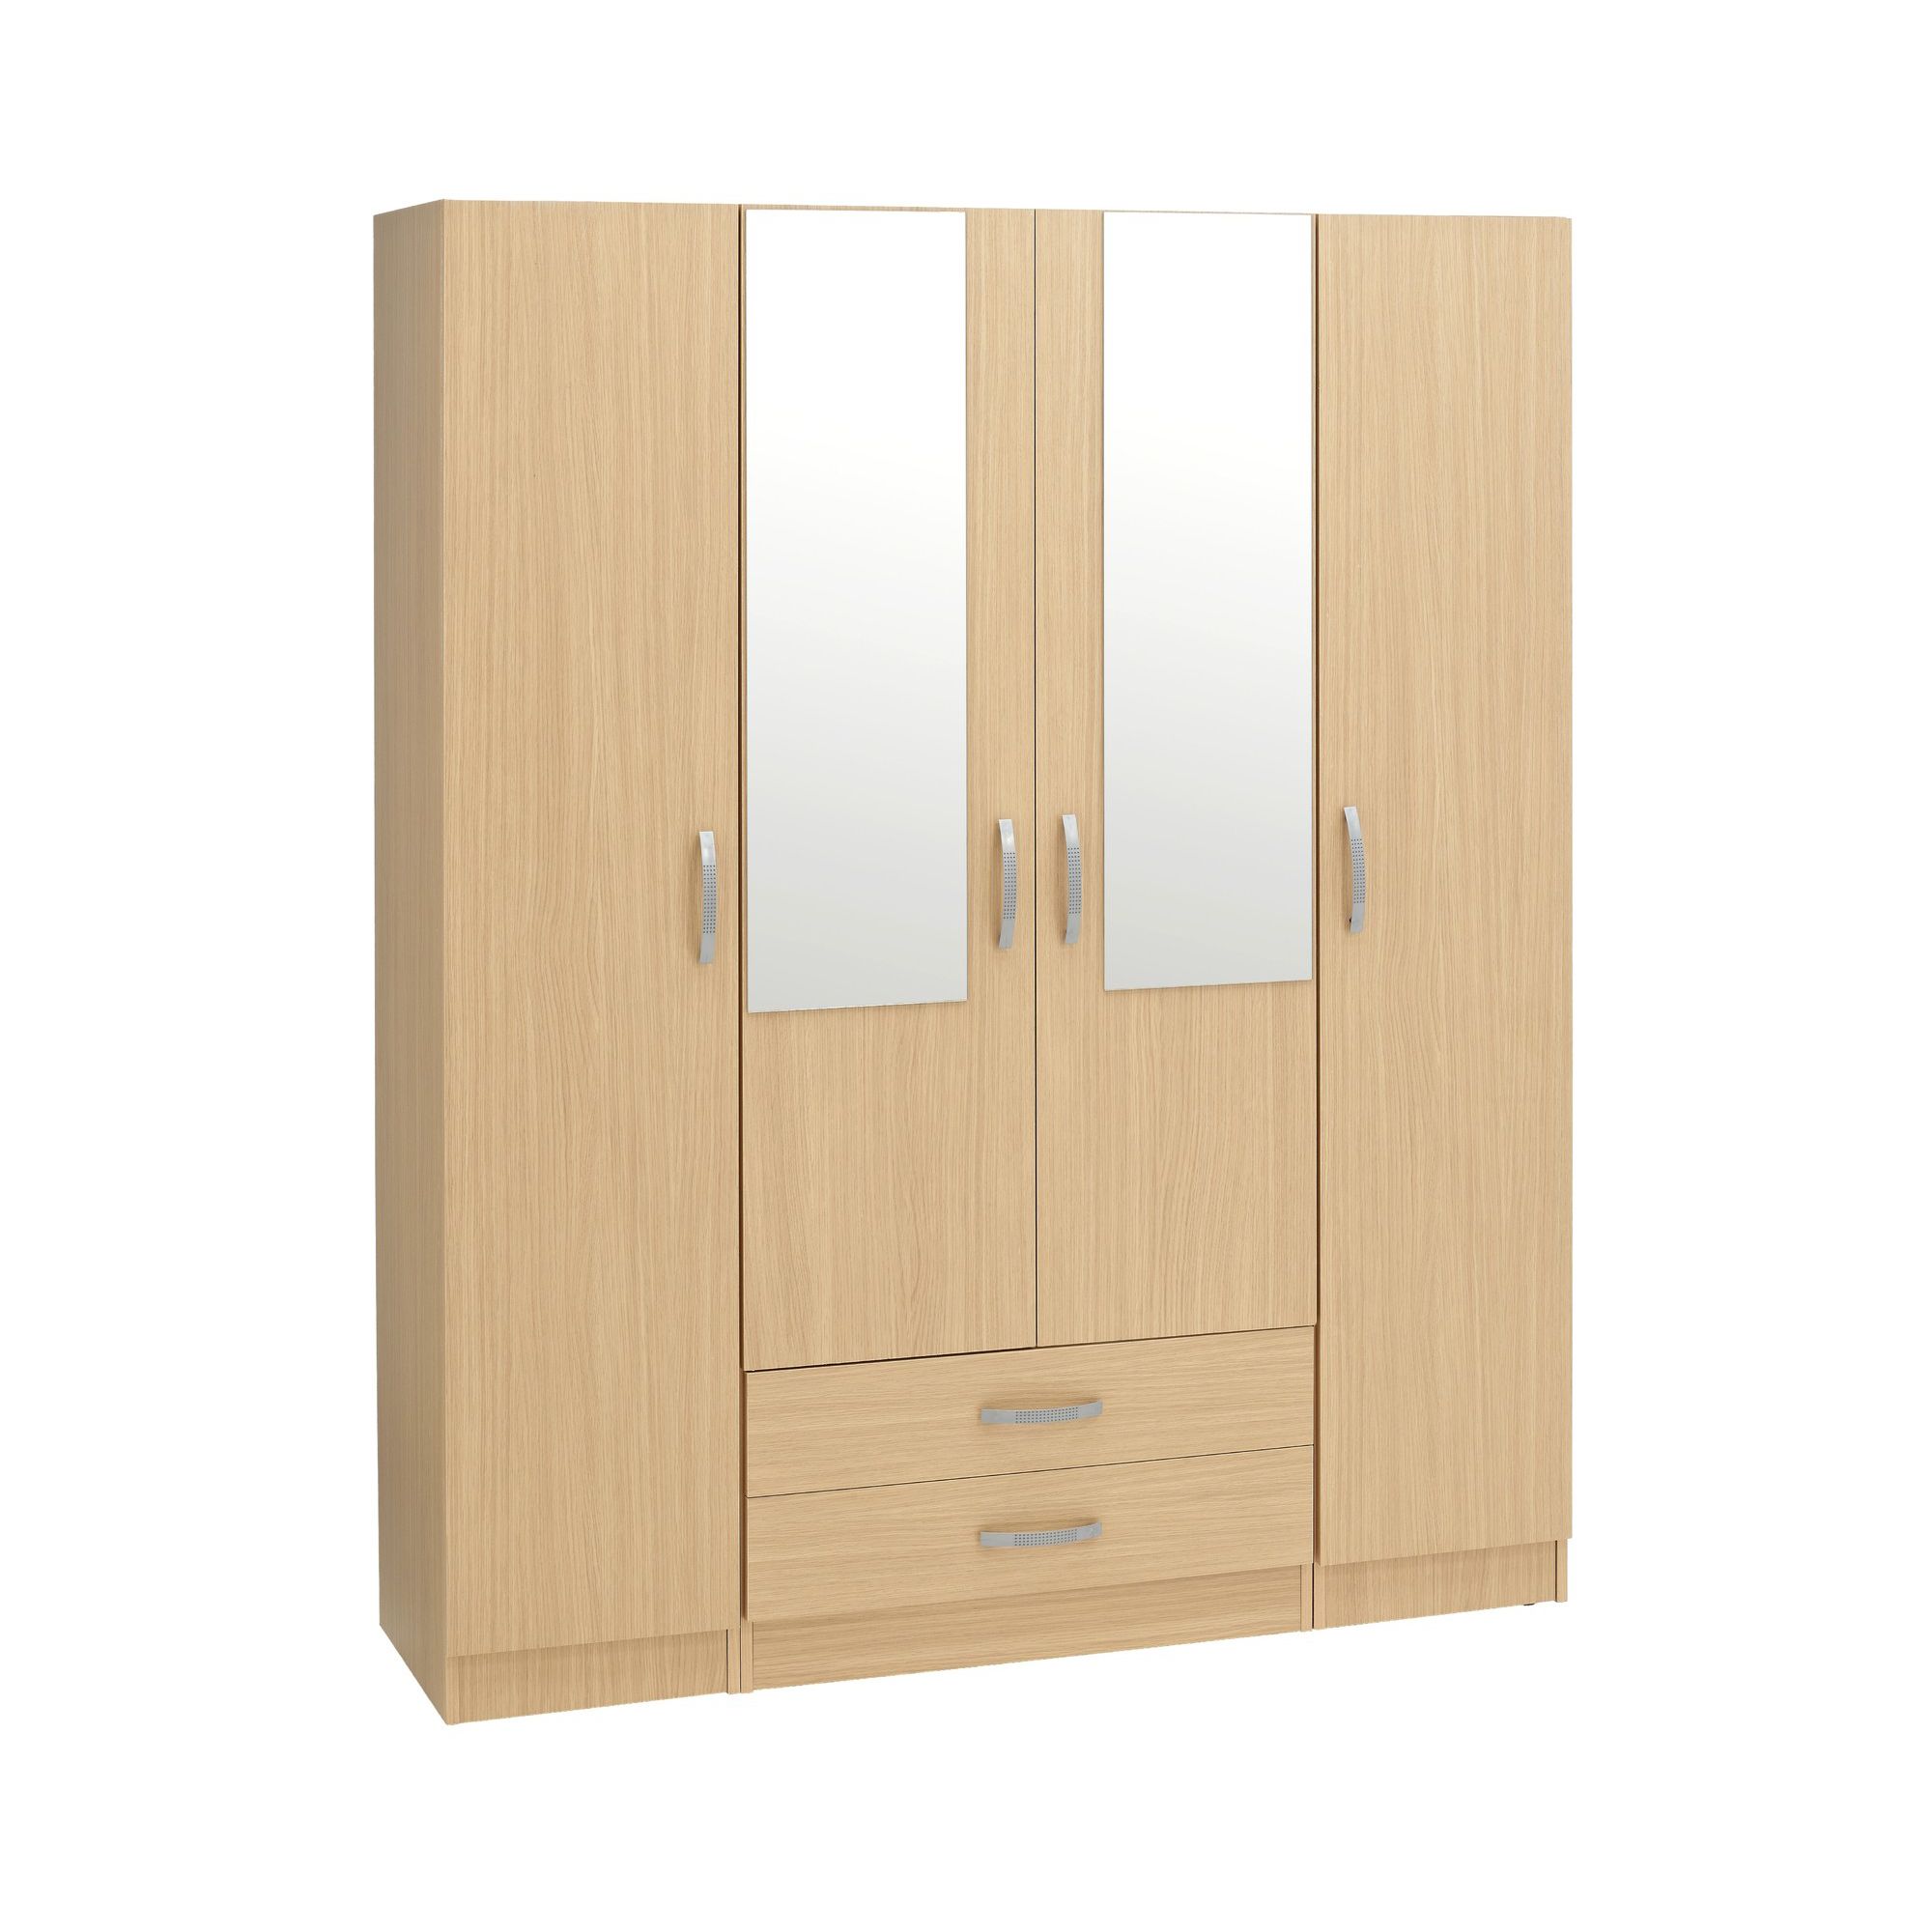 Ideal Furniture Budapest 2 Mirrors Wardrobe - Oak at Tesco Direct